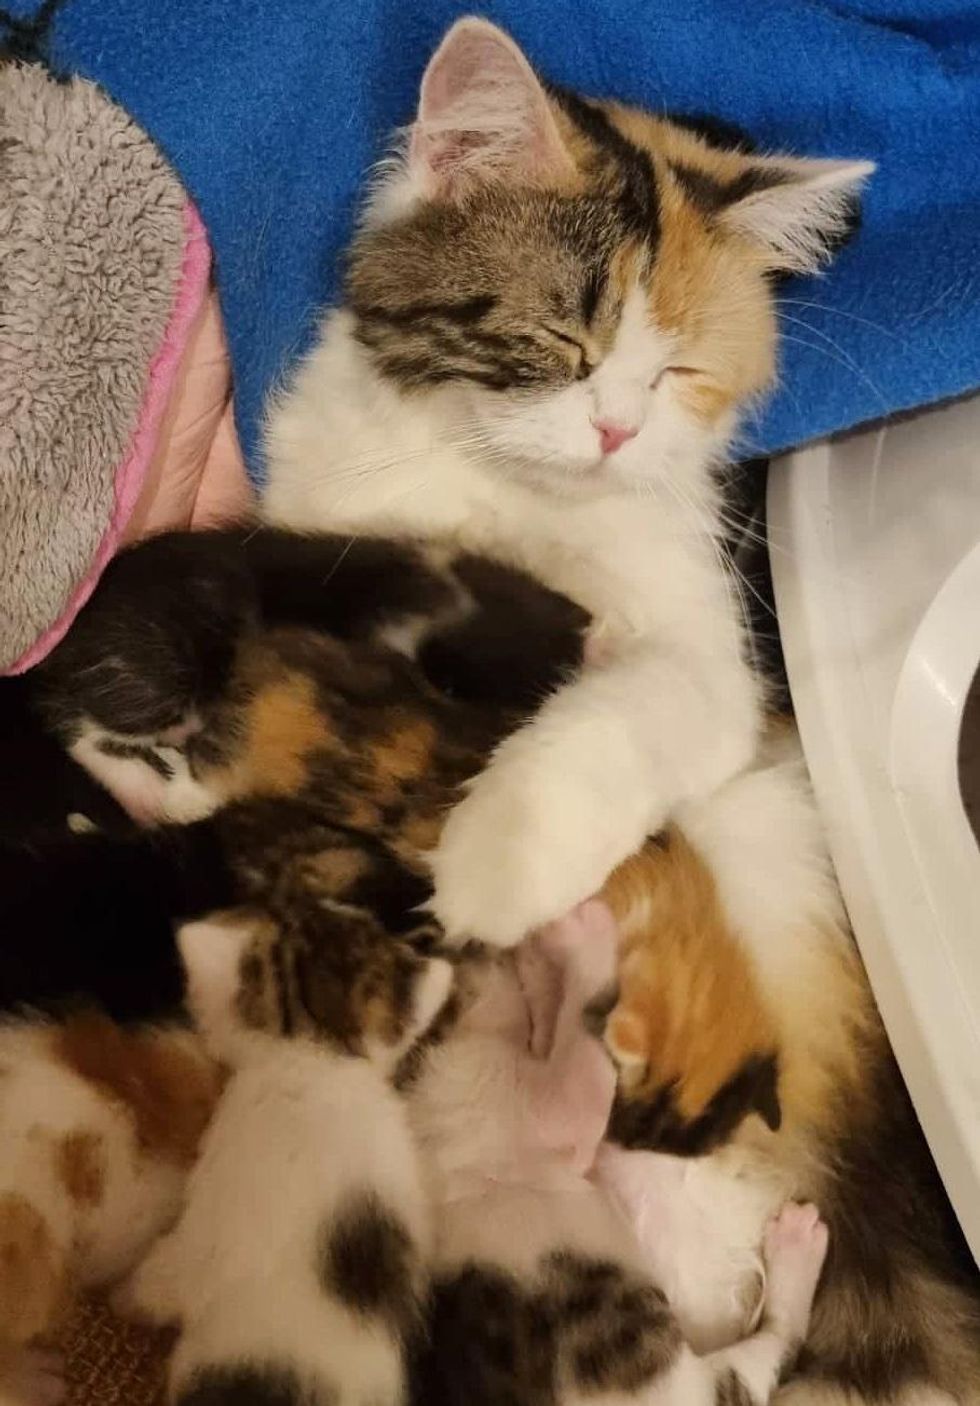 snuggly cat kittens